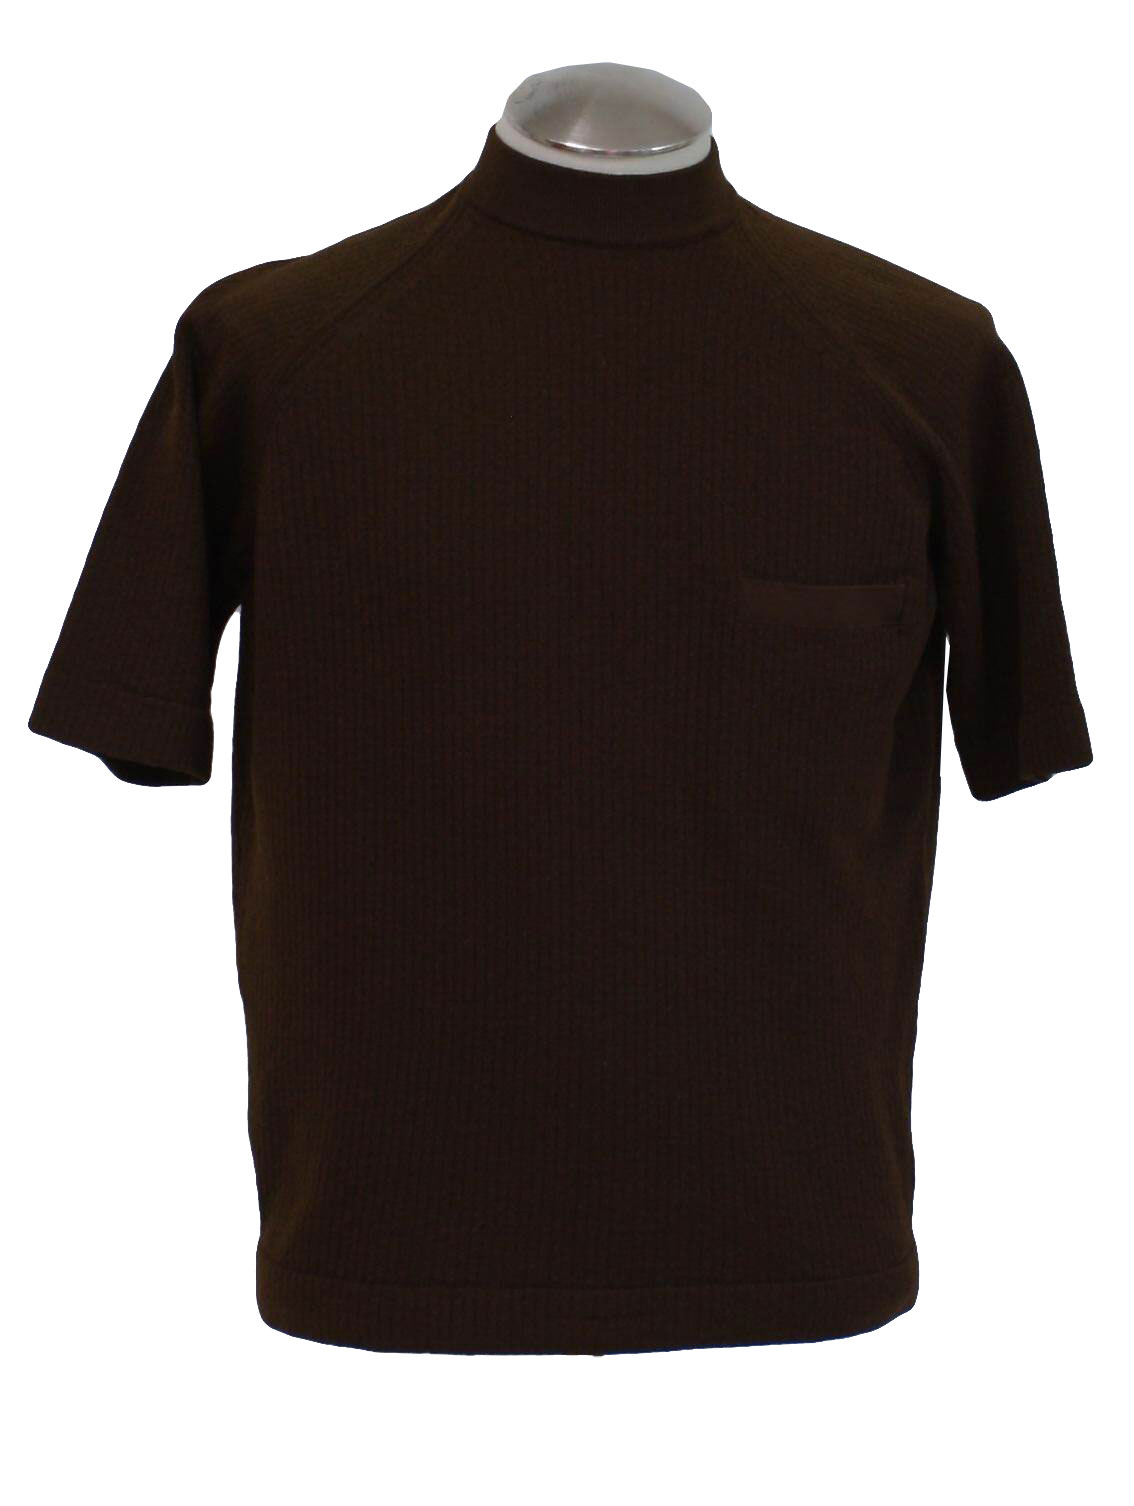 Vintage Pebble Beach 1960s Knit Shirt: 60s -Pebble Beach- Mens dark ...